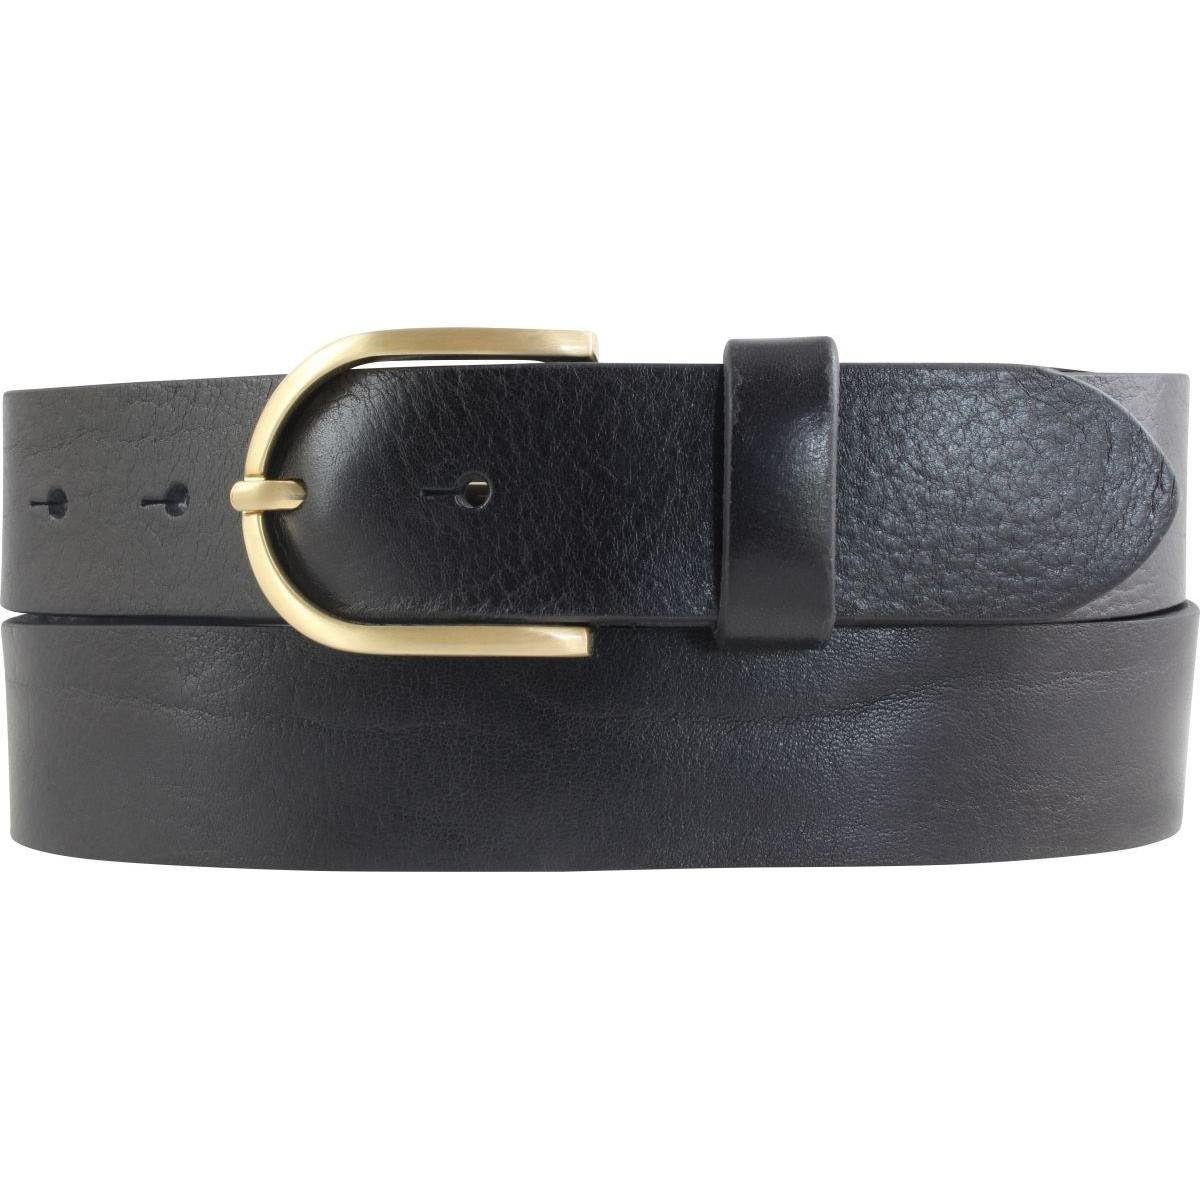 Schwarz, - cm 3,5 Gold für Vollrindleder Damen-Gürtel aus - Damen Ledergürtel BELTINGER 35mm Jeans-Gürtel